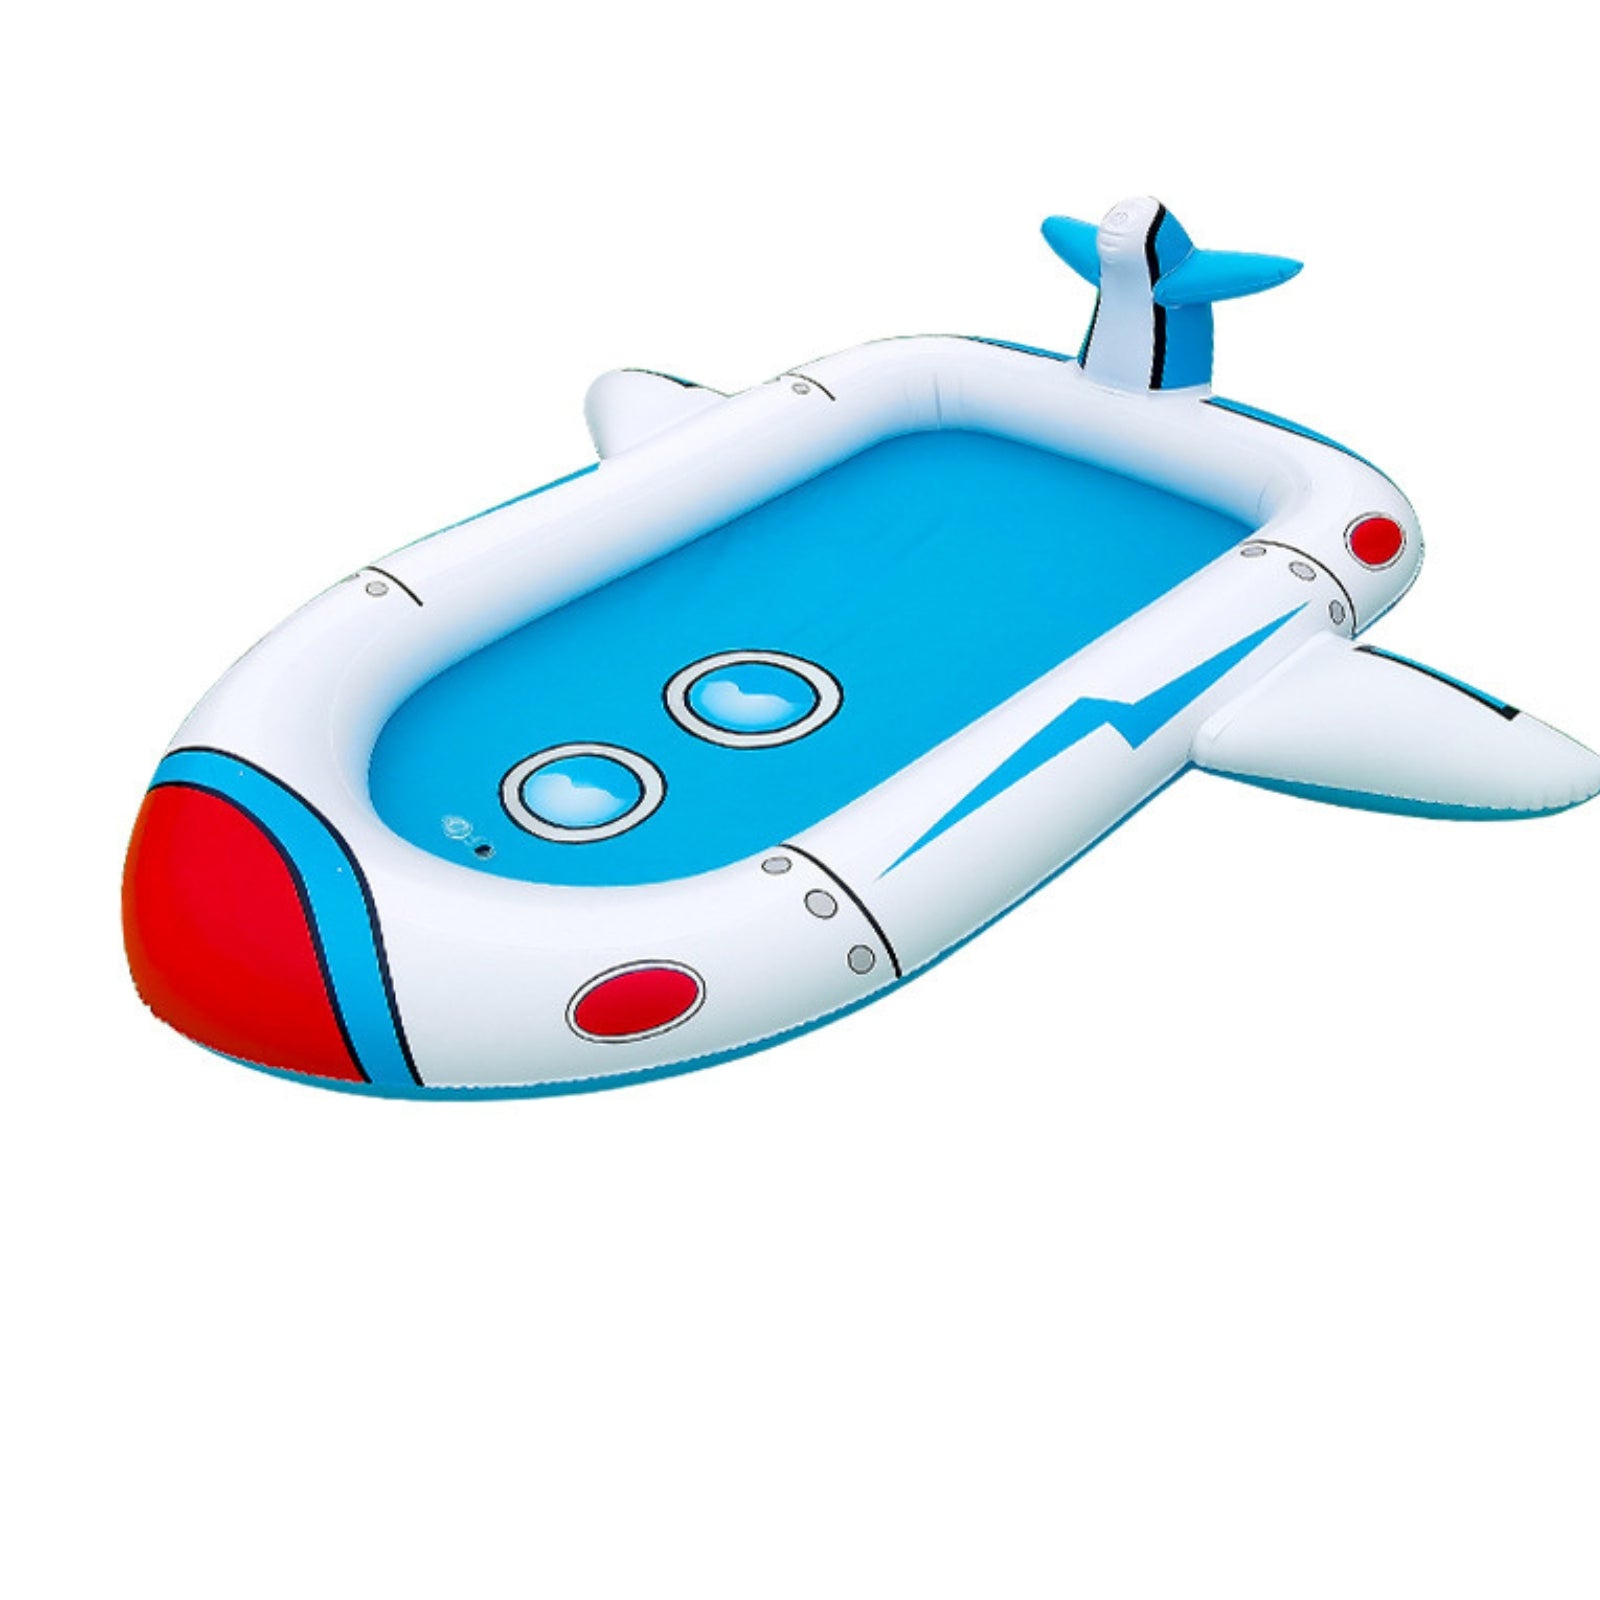    Air-Plane-Inflatable-Splash-Pad-Sprinkler-Pool-for-Kids